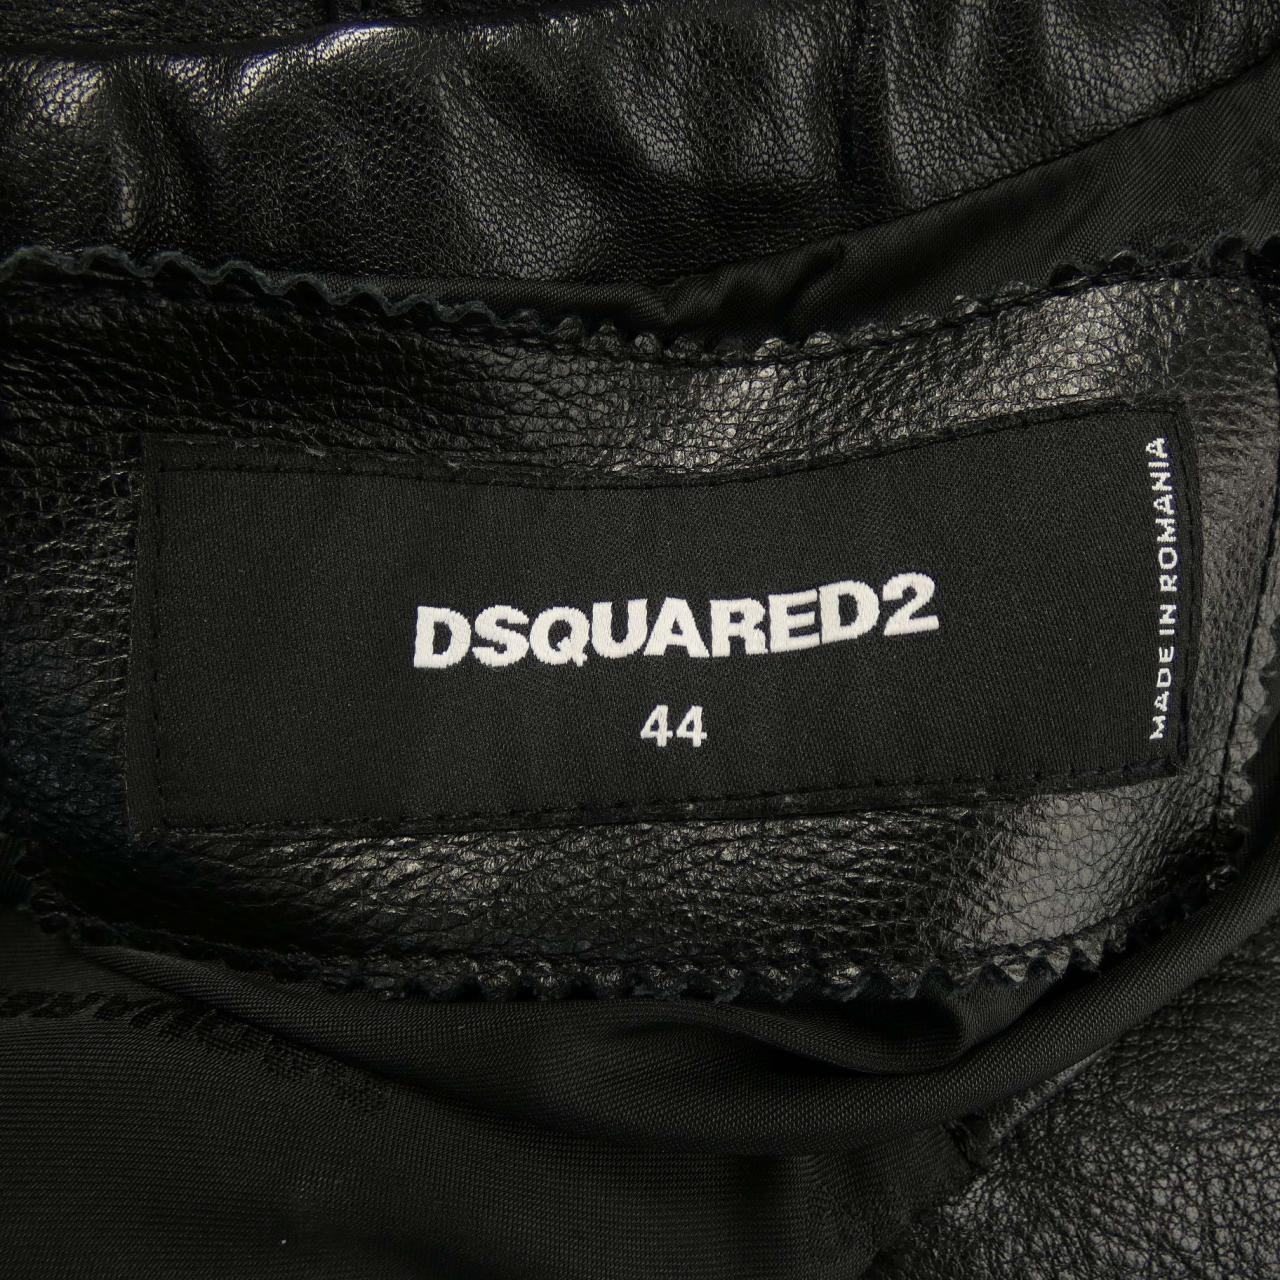 DSQUARED2 jacket